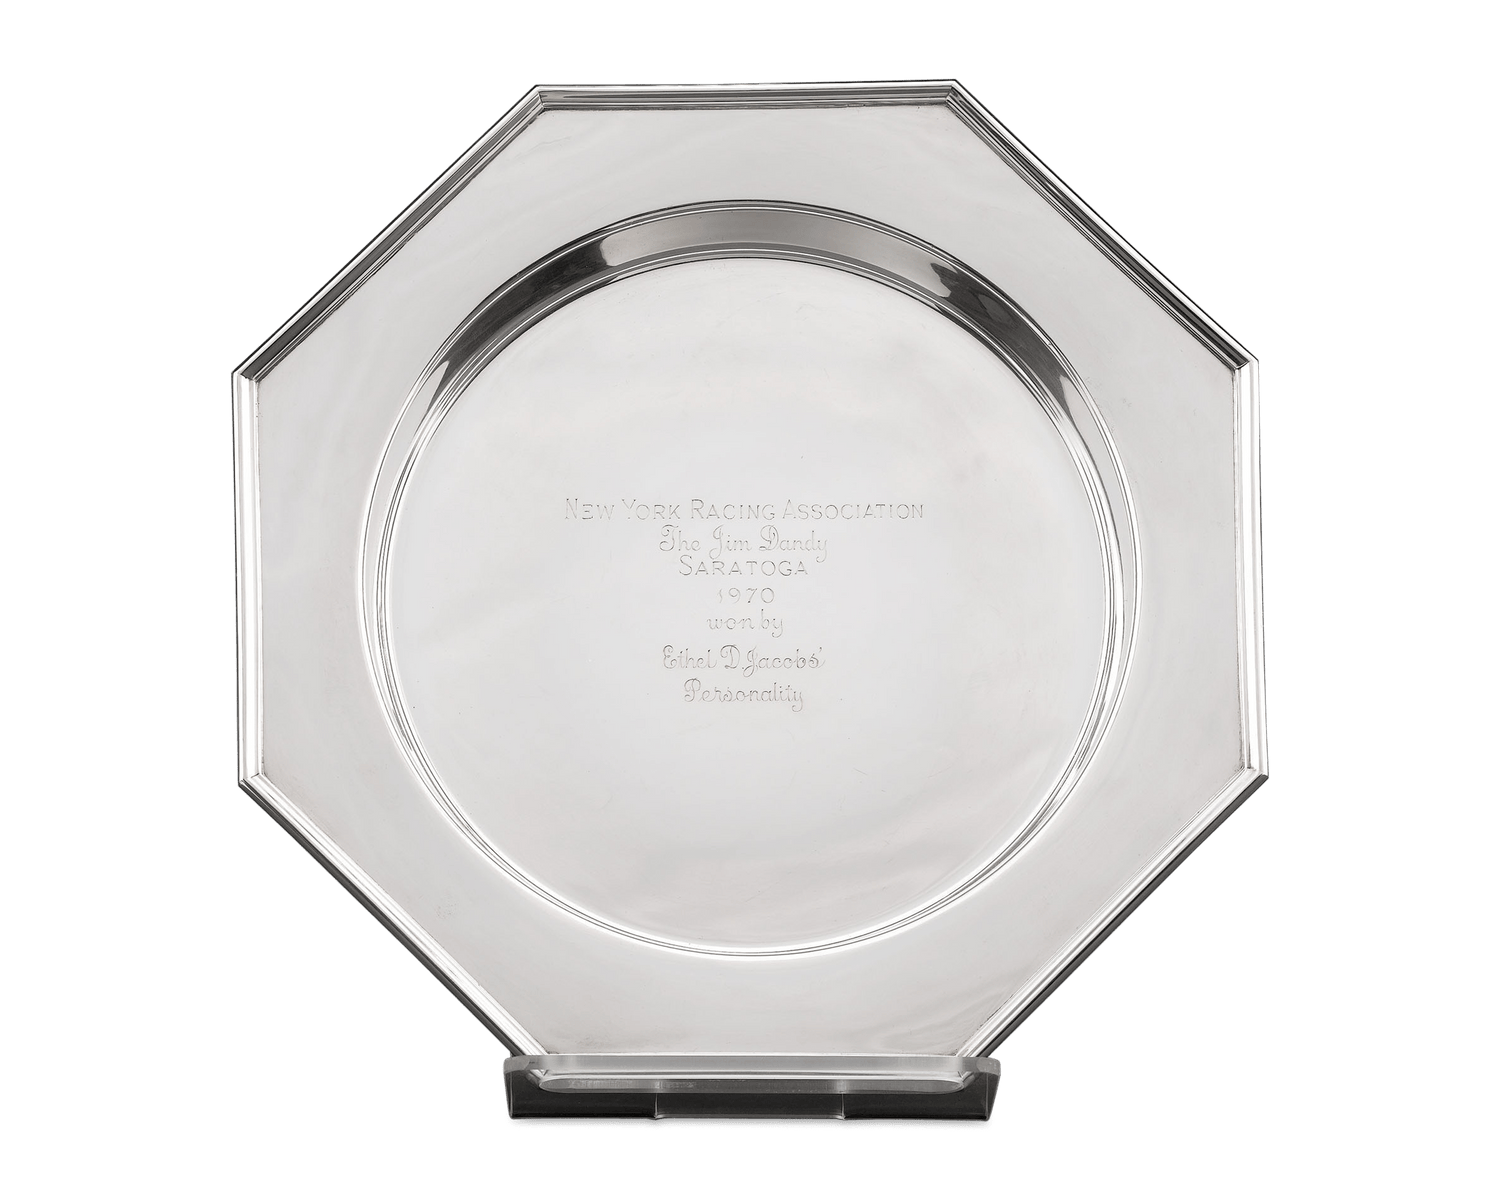 The Saratoga Trophy